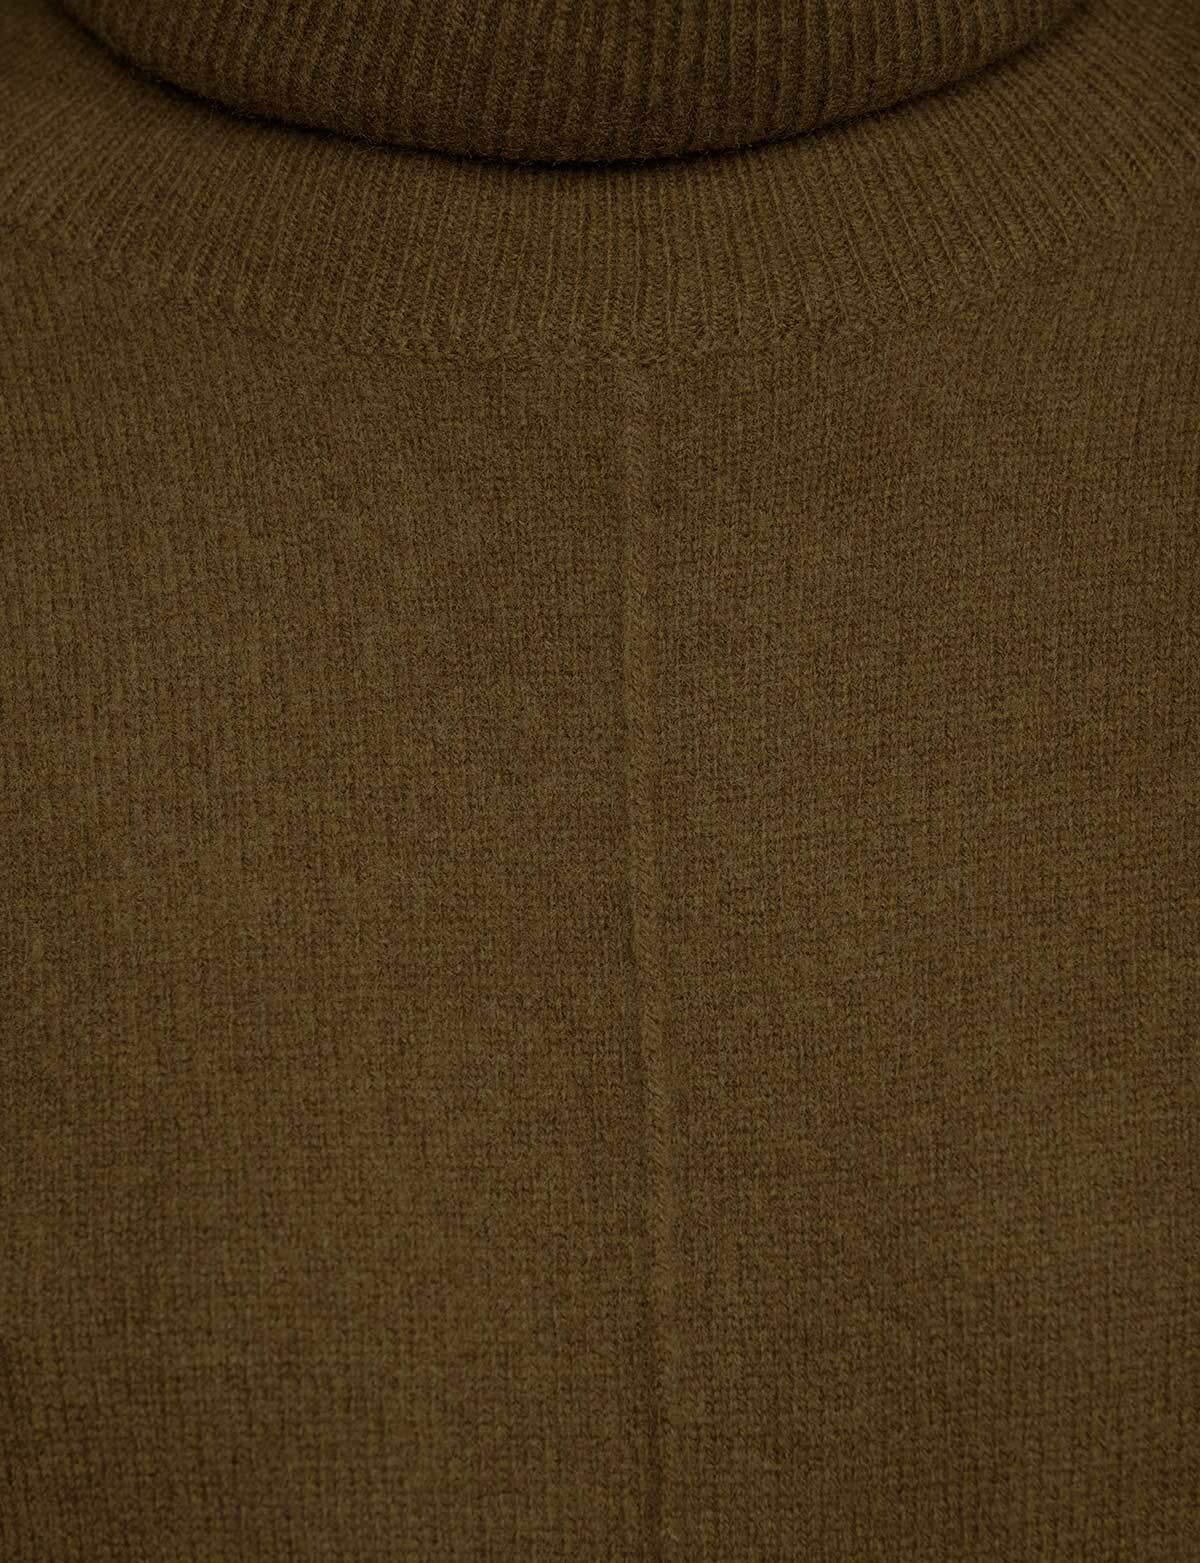 Slit Long Turtleneck Sweater in Saddle Brown-PREORDER